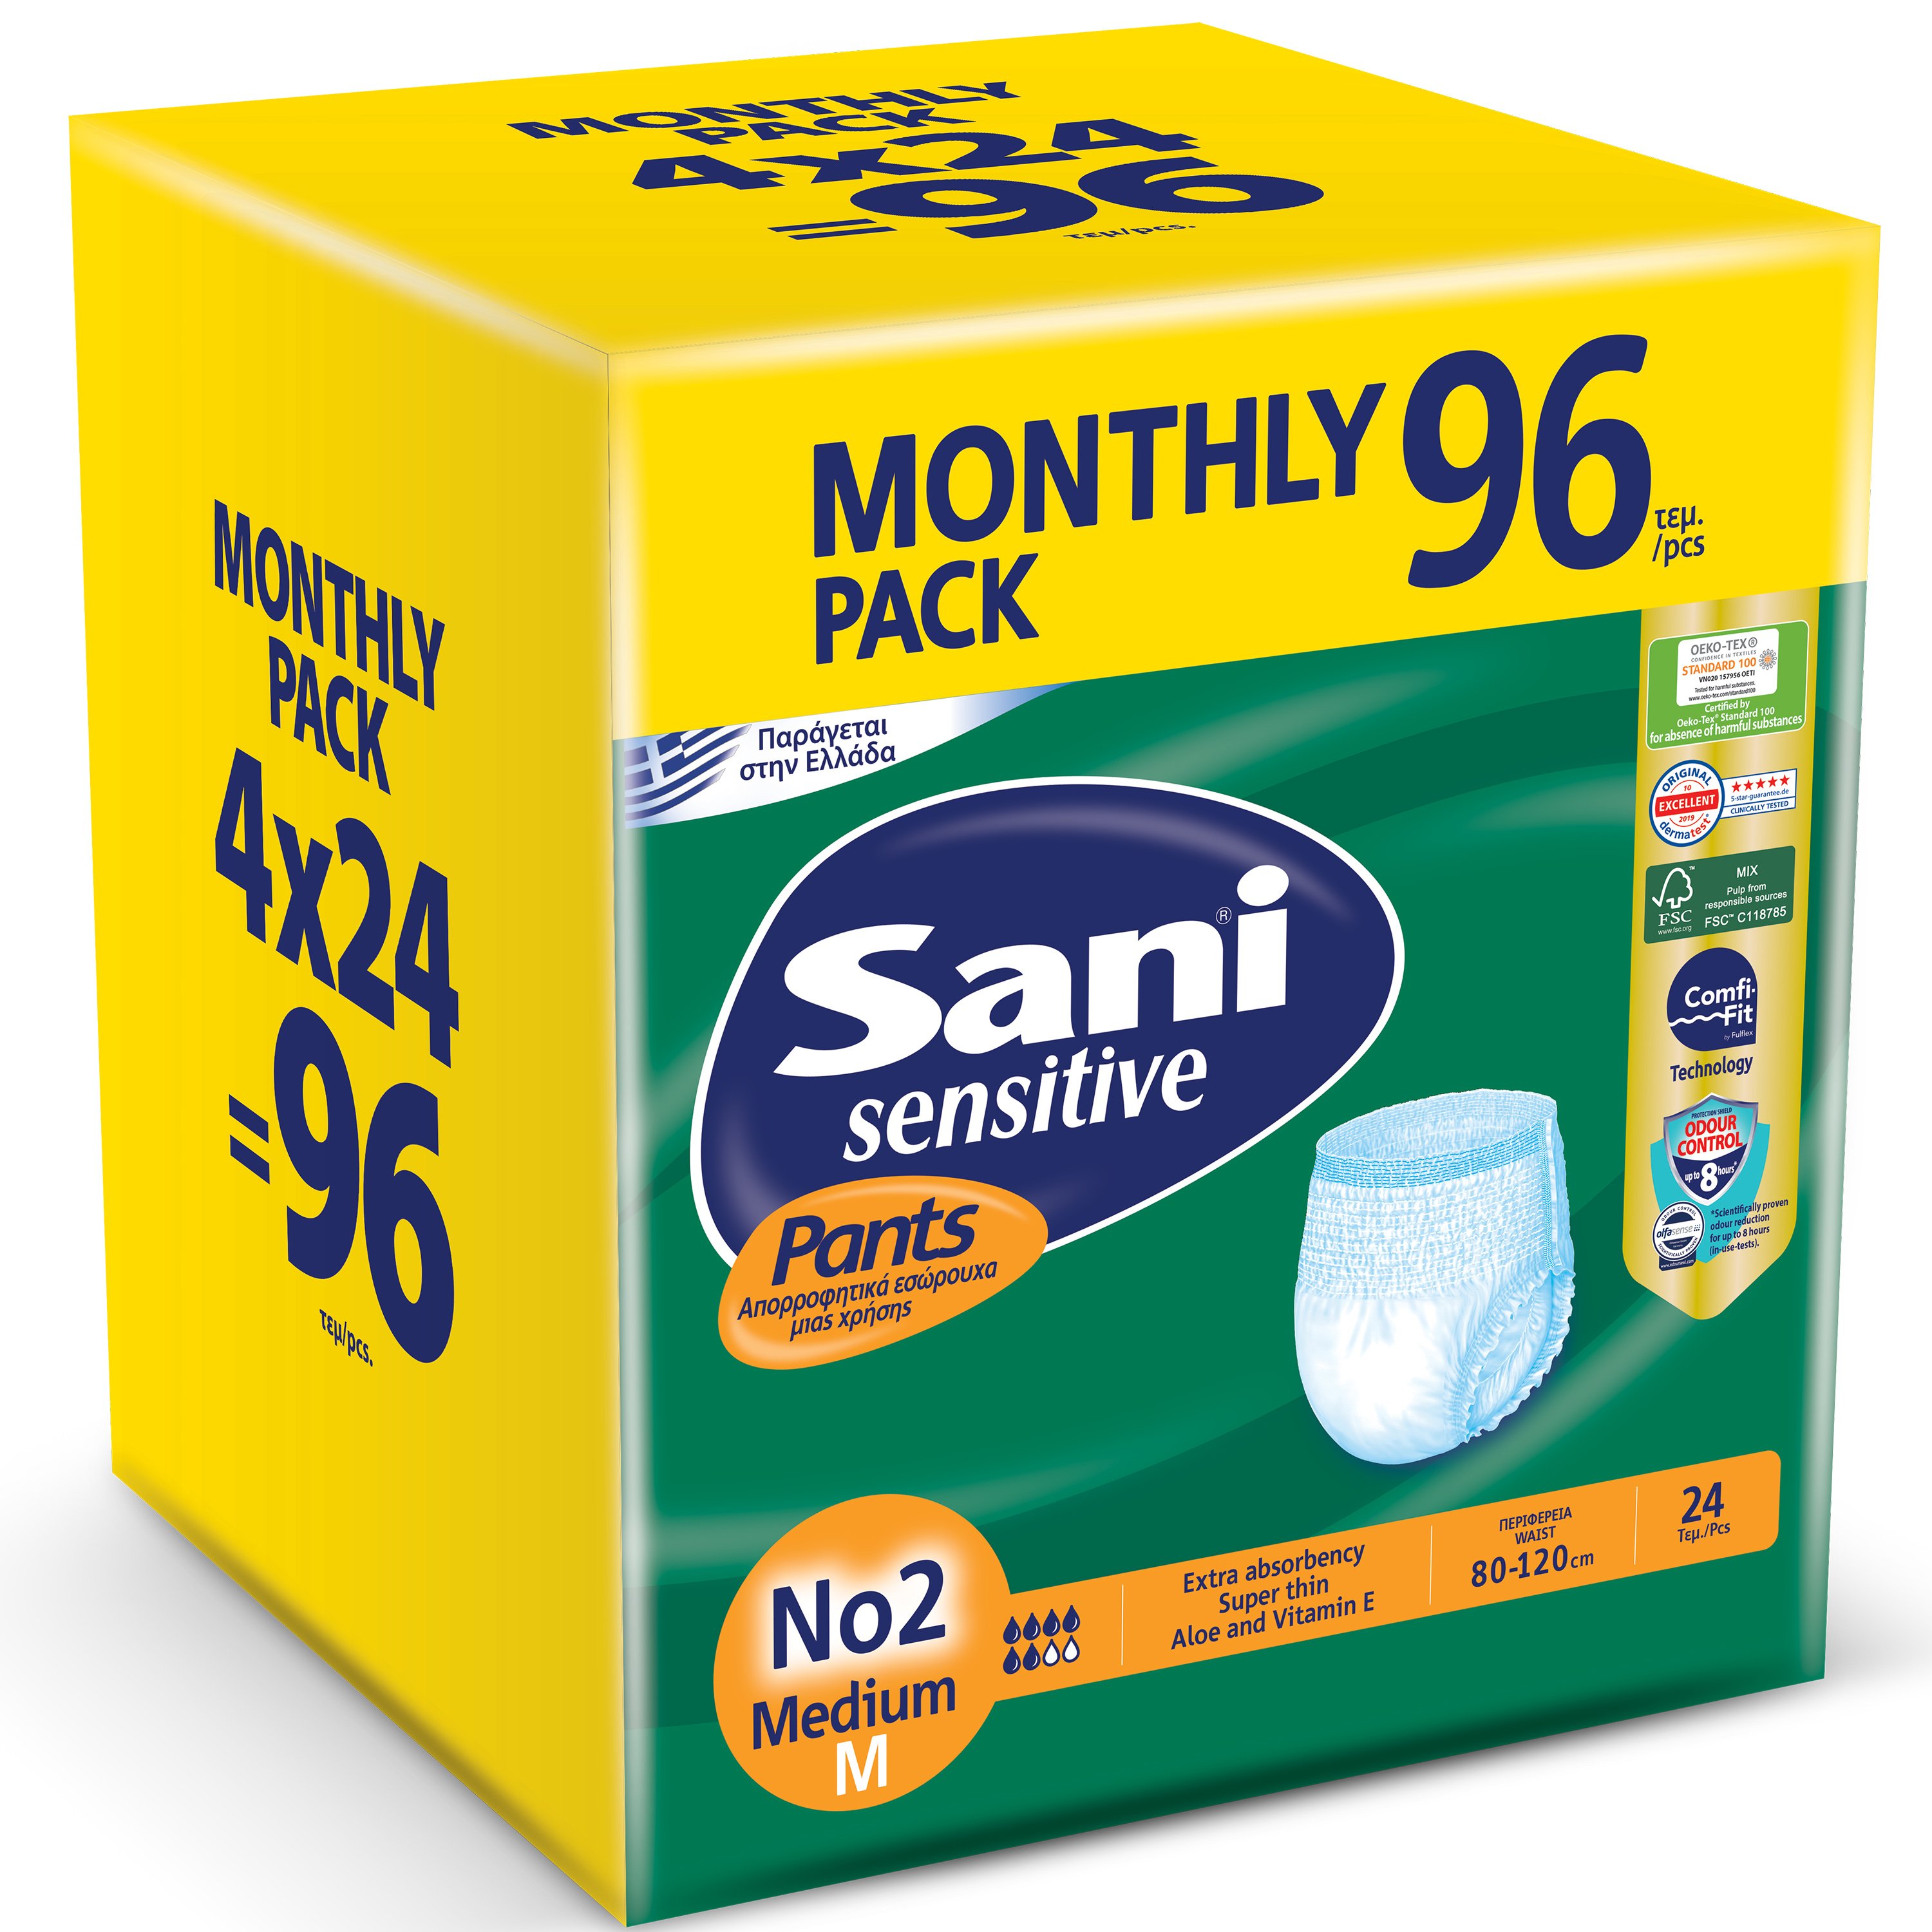 Sani Sensitive Pants Monthly Pack Ελαστικό Εσώρουχο Ακράτειας 96 Τεμάχια - No2 Medium 80-120cm 42057